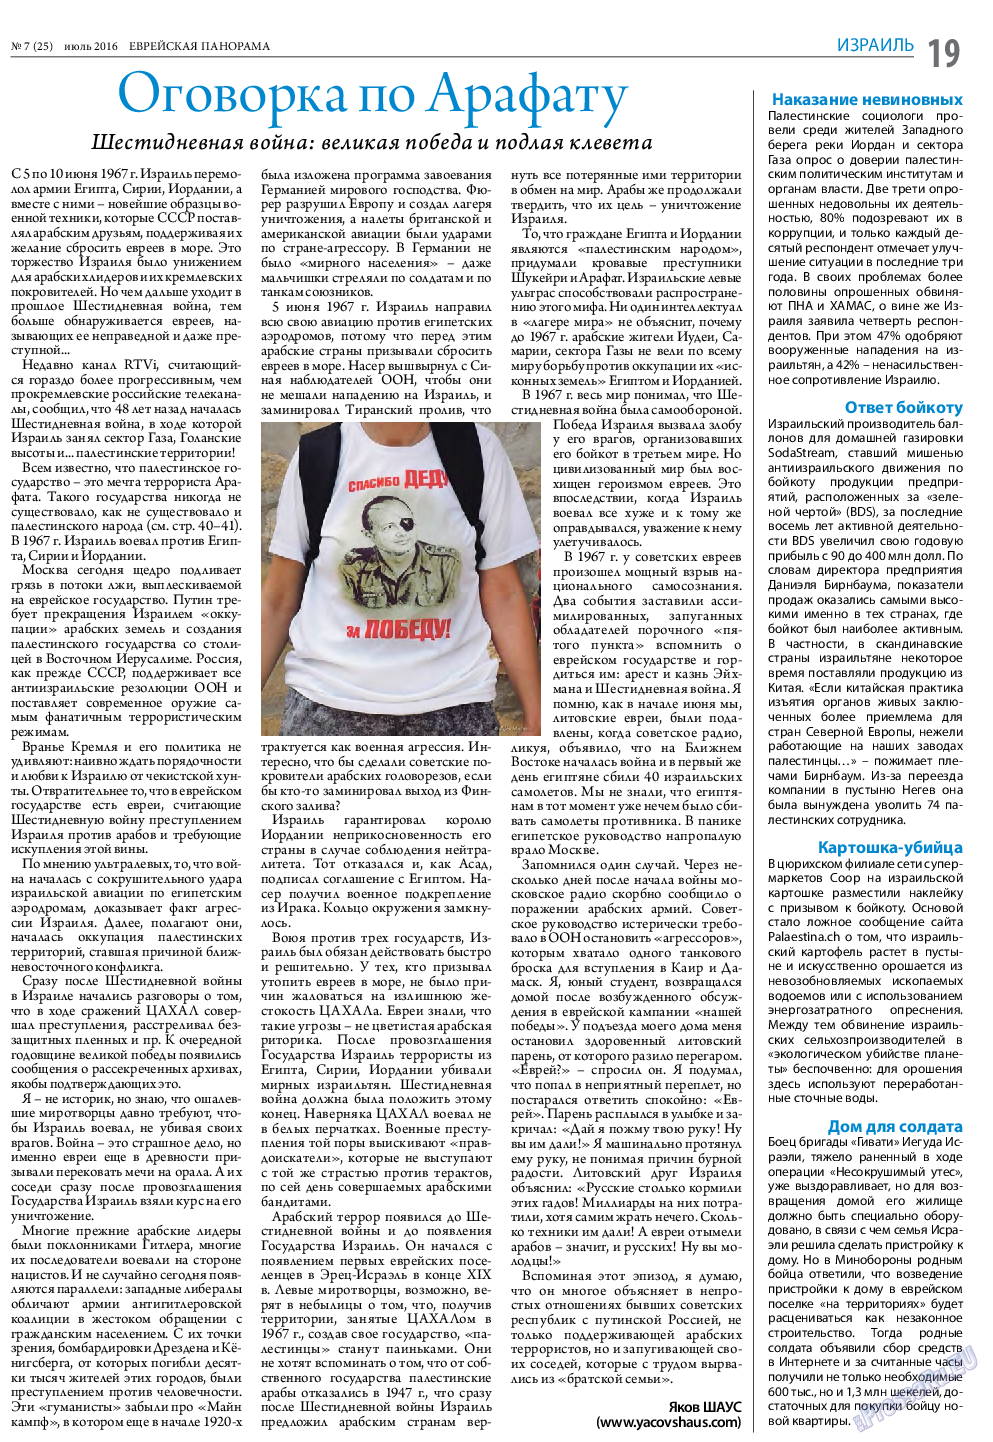 Еврейская панорама, газета. 2016 №7 стр.19